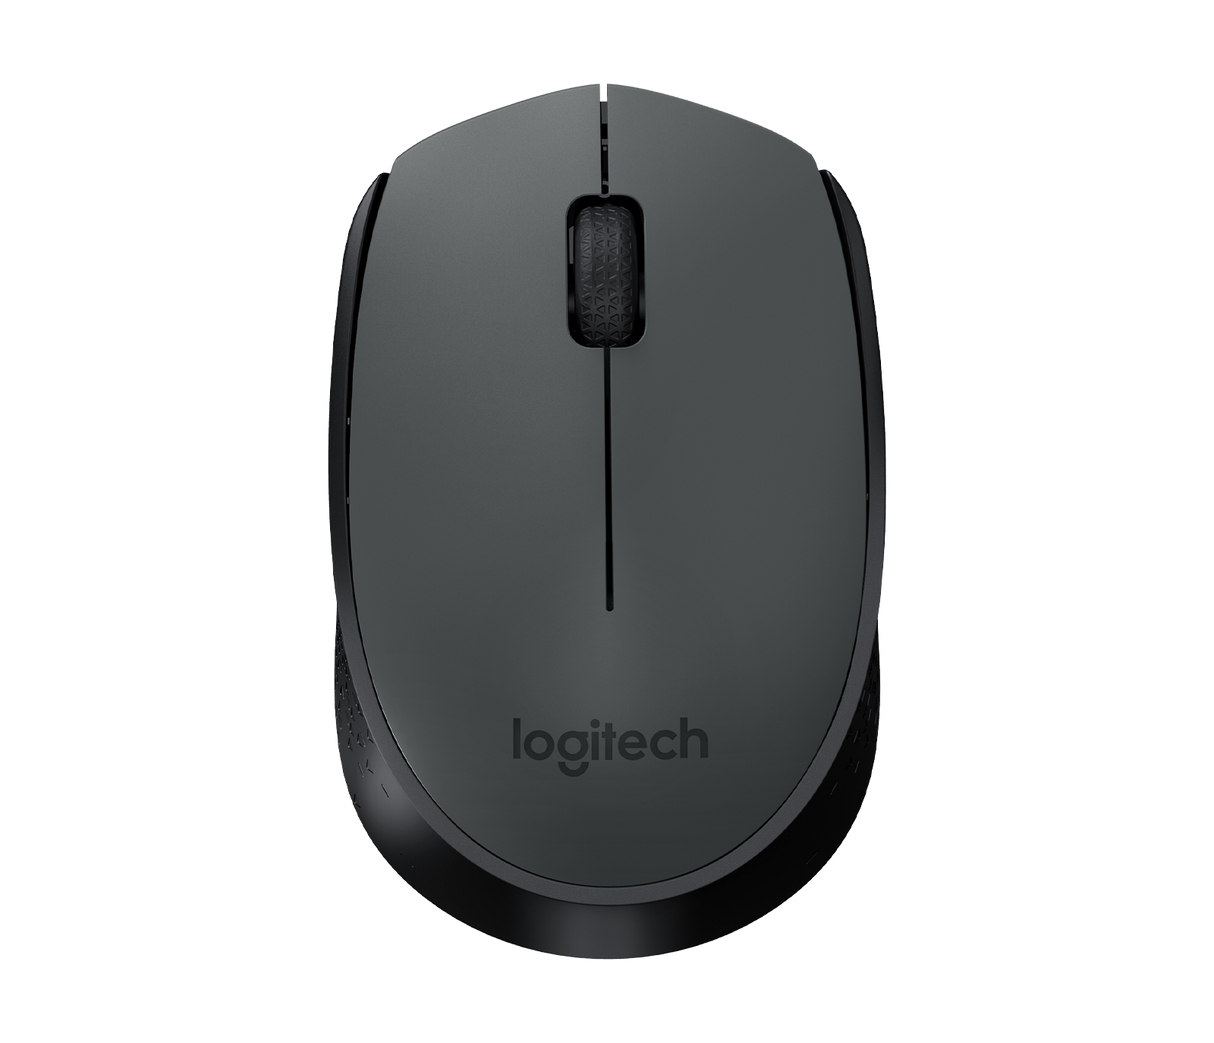 Logitech Wireless Mouse M170 grey